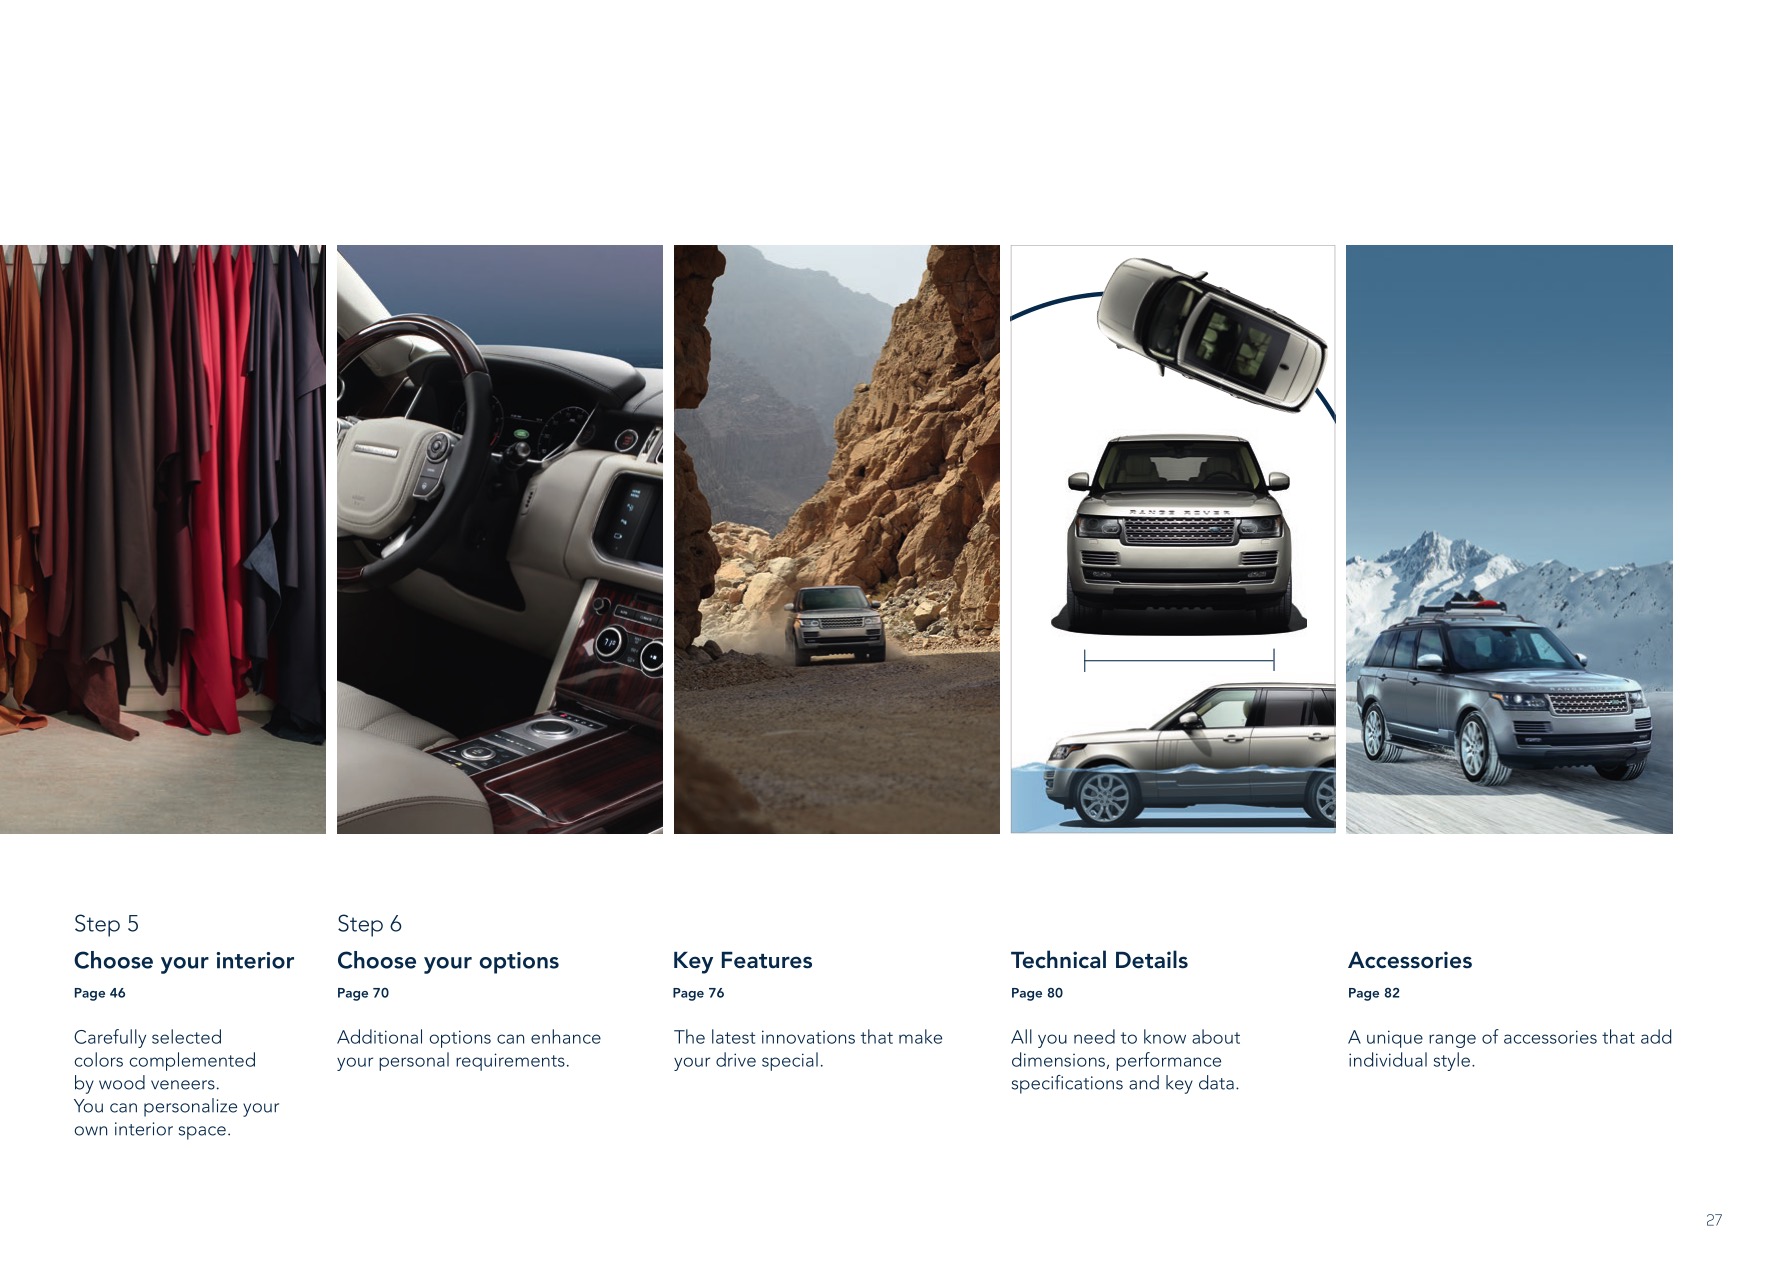 2015 Range Rover Brochure Page 55